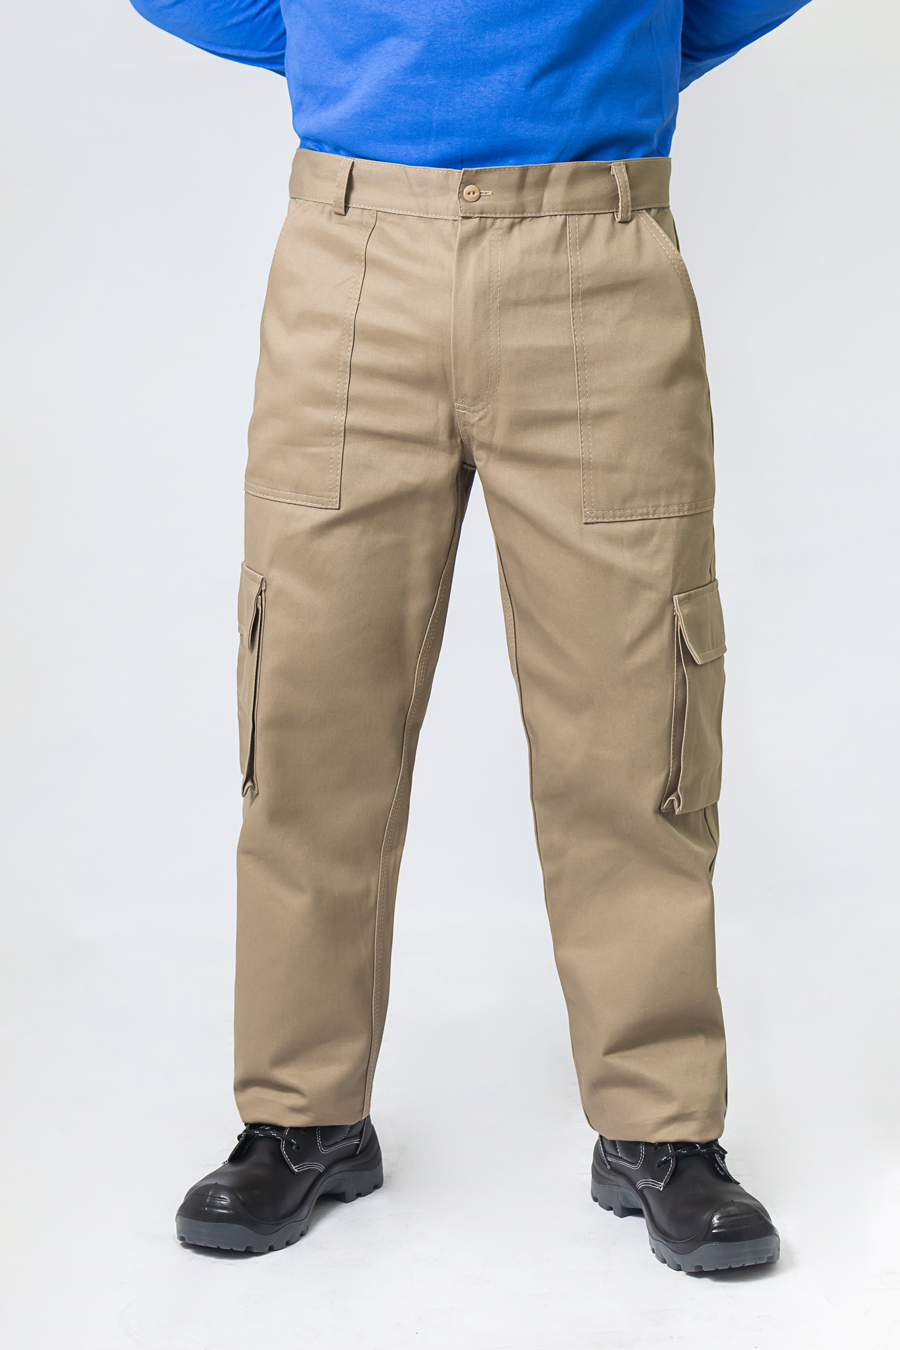 Pantalones - pantalones tipo cargo - pantalón camuflado